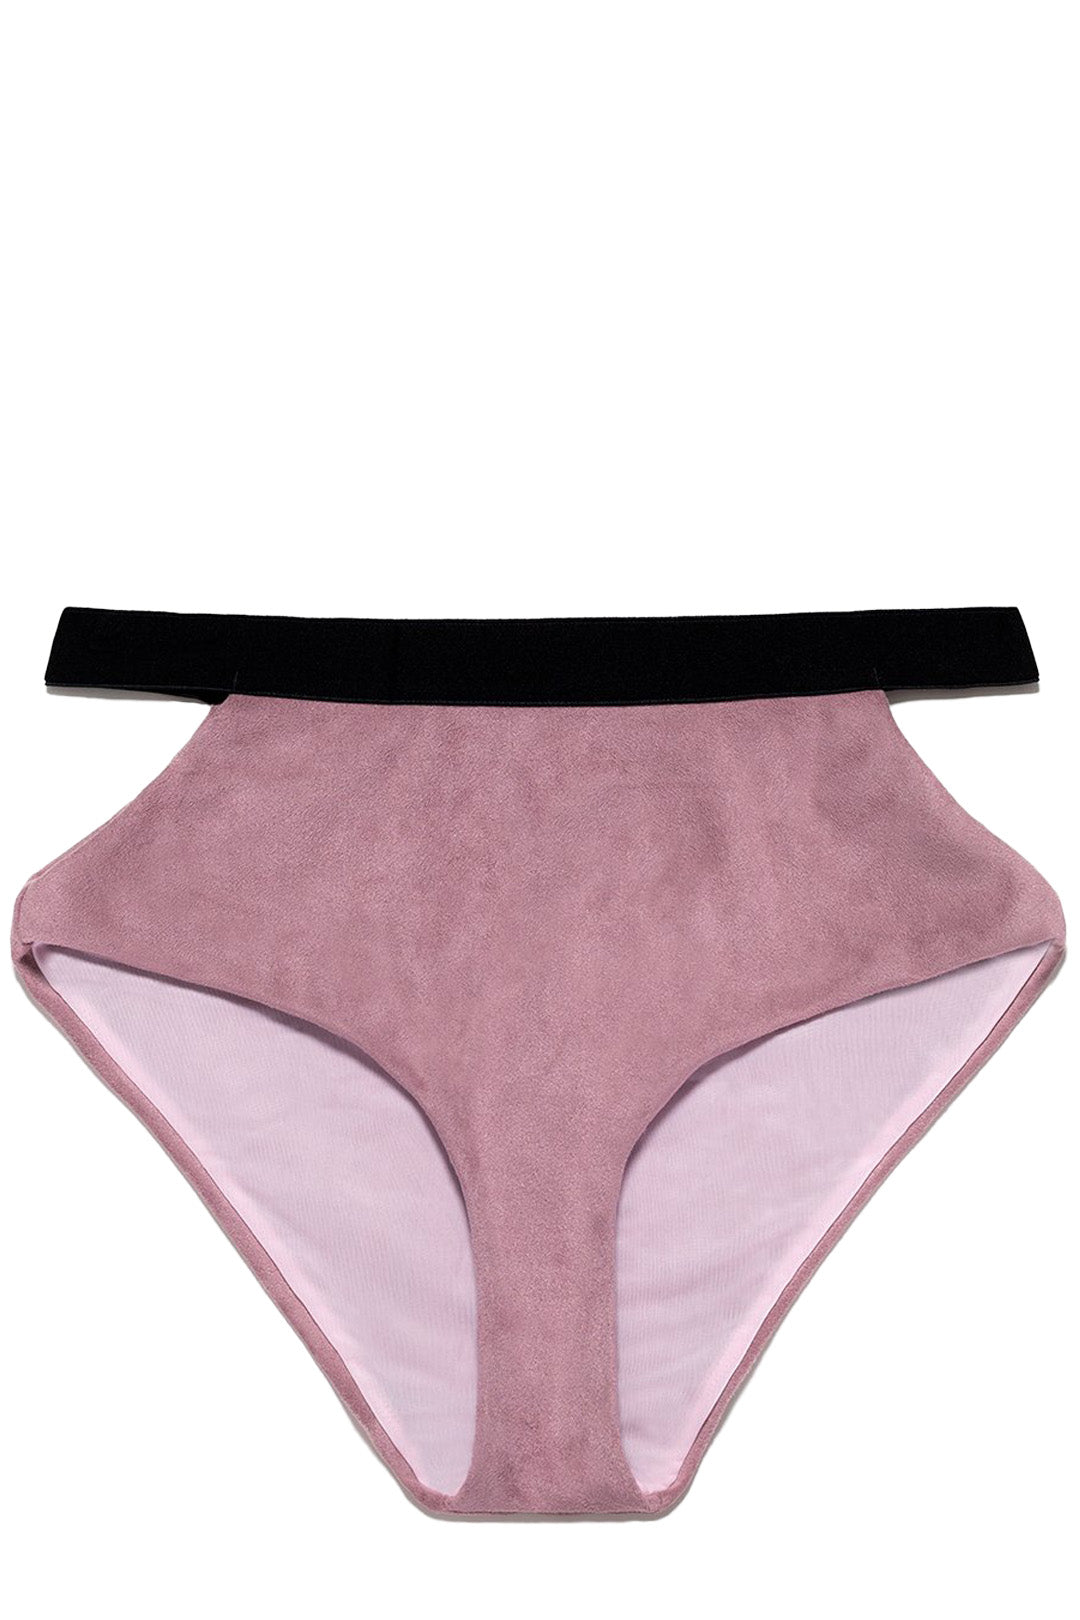 Victoria’s Secret Pink Velvet Thong Underwear Panty Sizes S, M, L & Xl. NWT